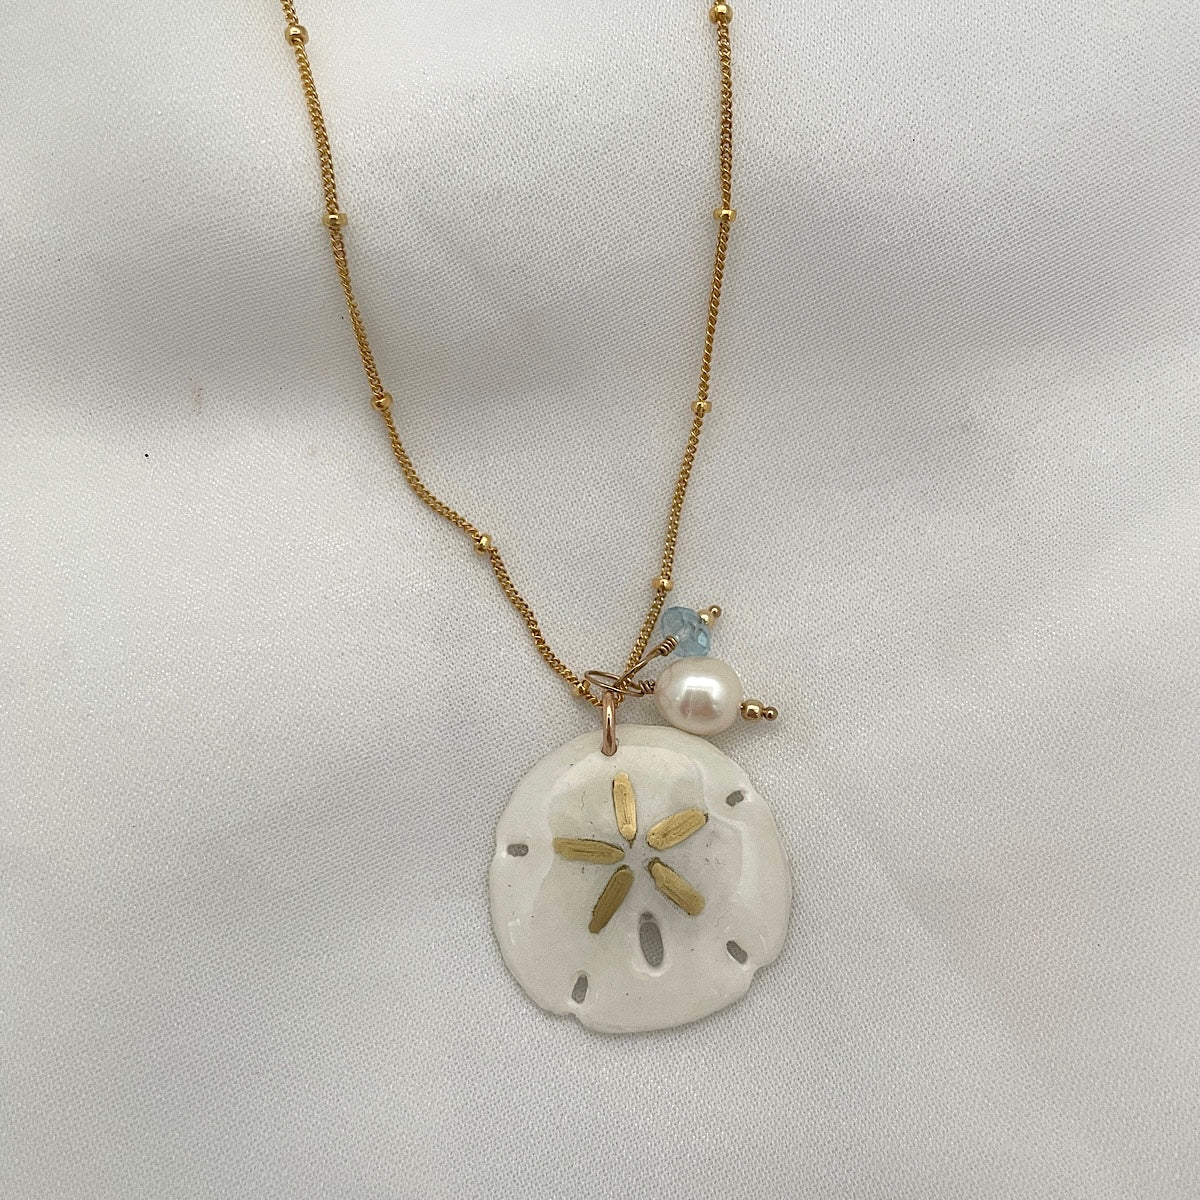 Sand Dollar Charm Necklace